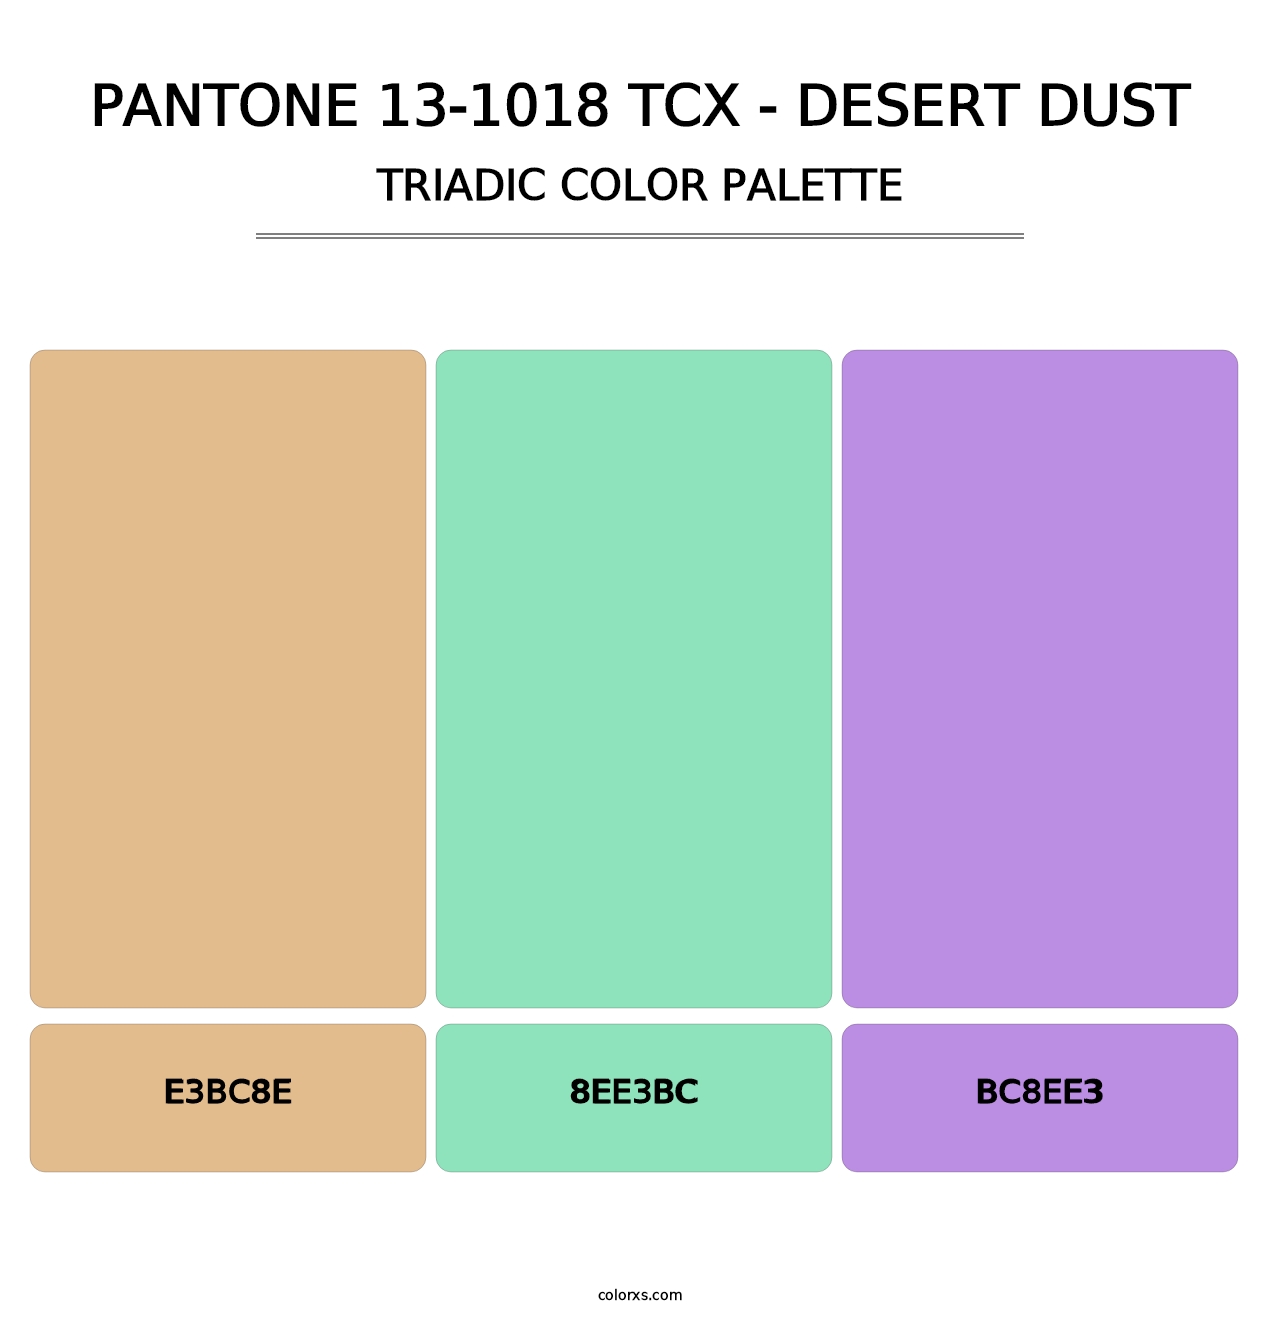 PANTONE 13-1018 TCX - Desert Dust - Triadic Color Palette